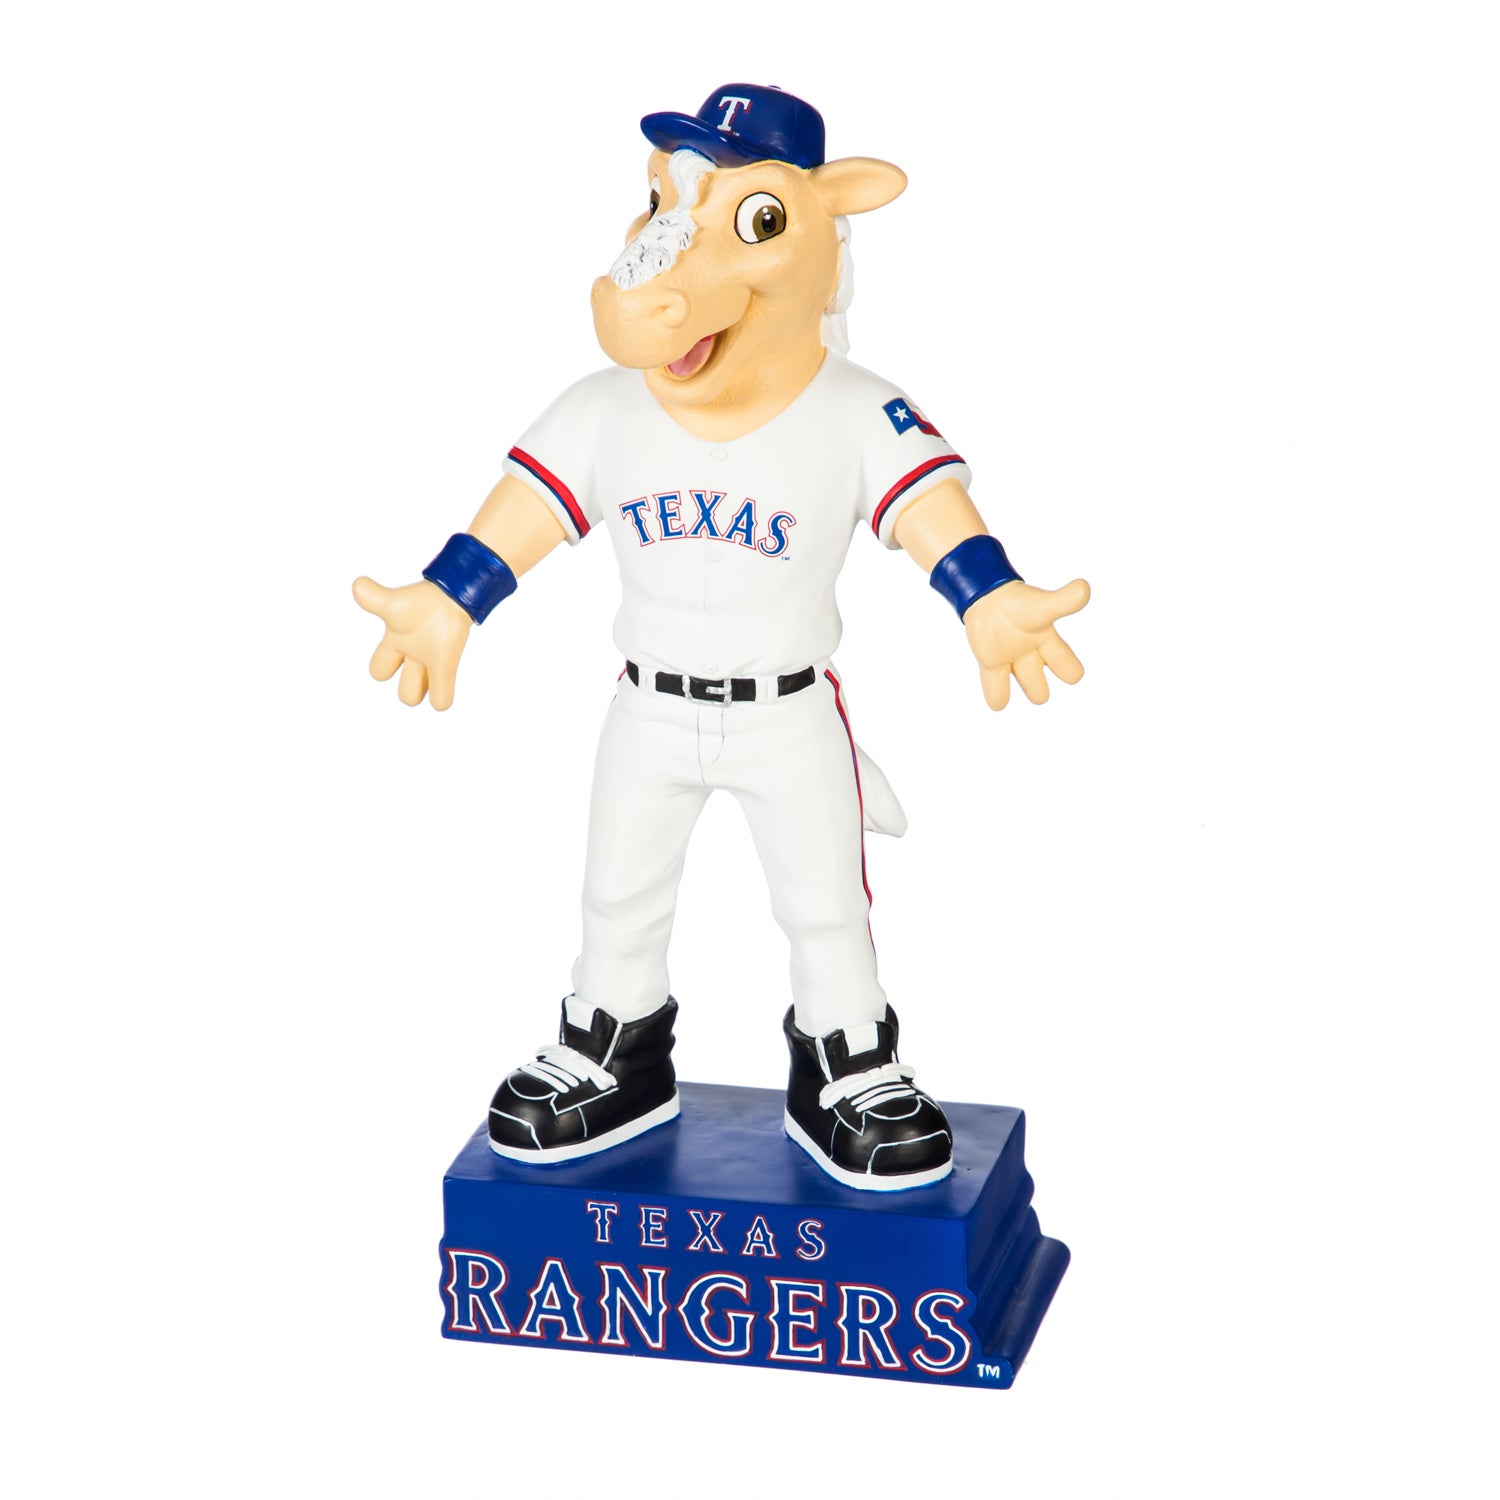 Texas Rangers, Mascot Statue